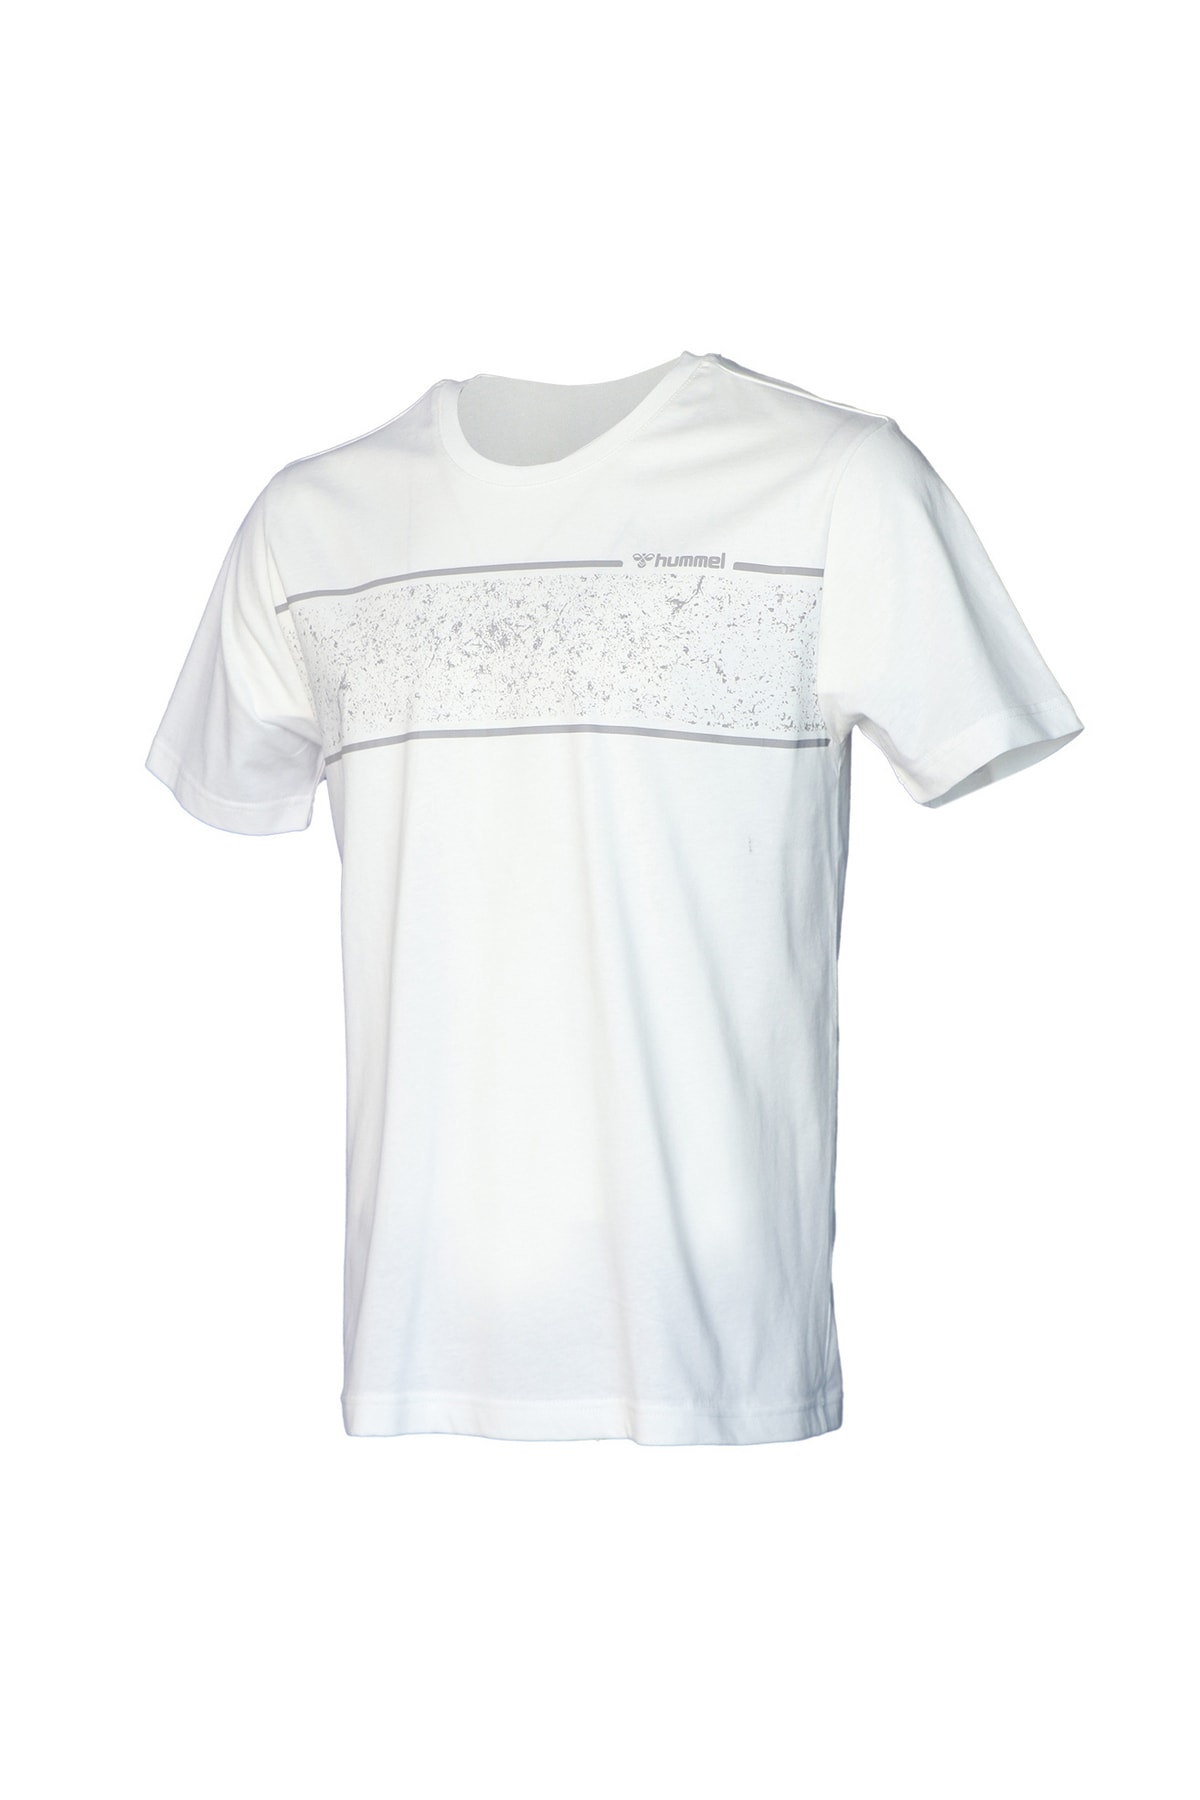 HUMMEL تی شرت مردانه سفید یقه ساده 911695-9003 Hmlwagner S/s